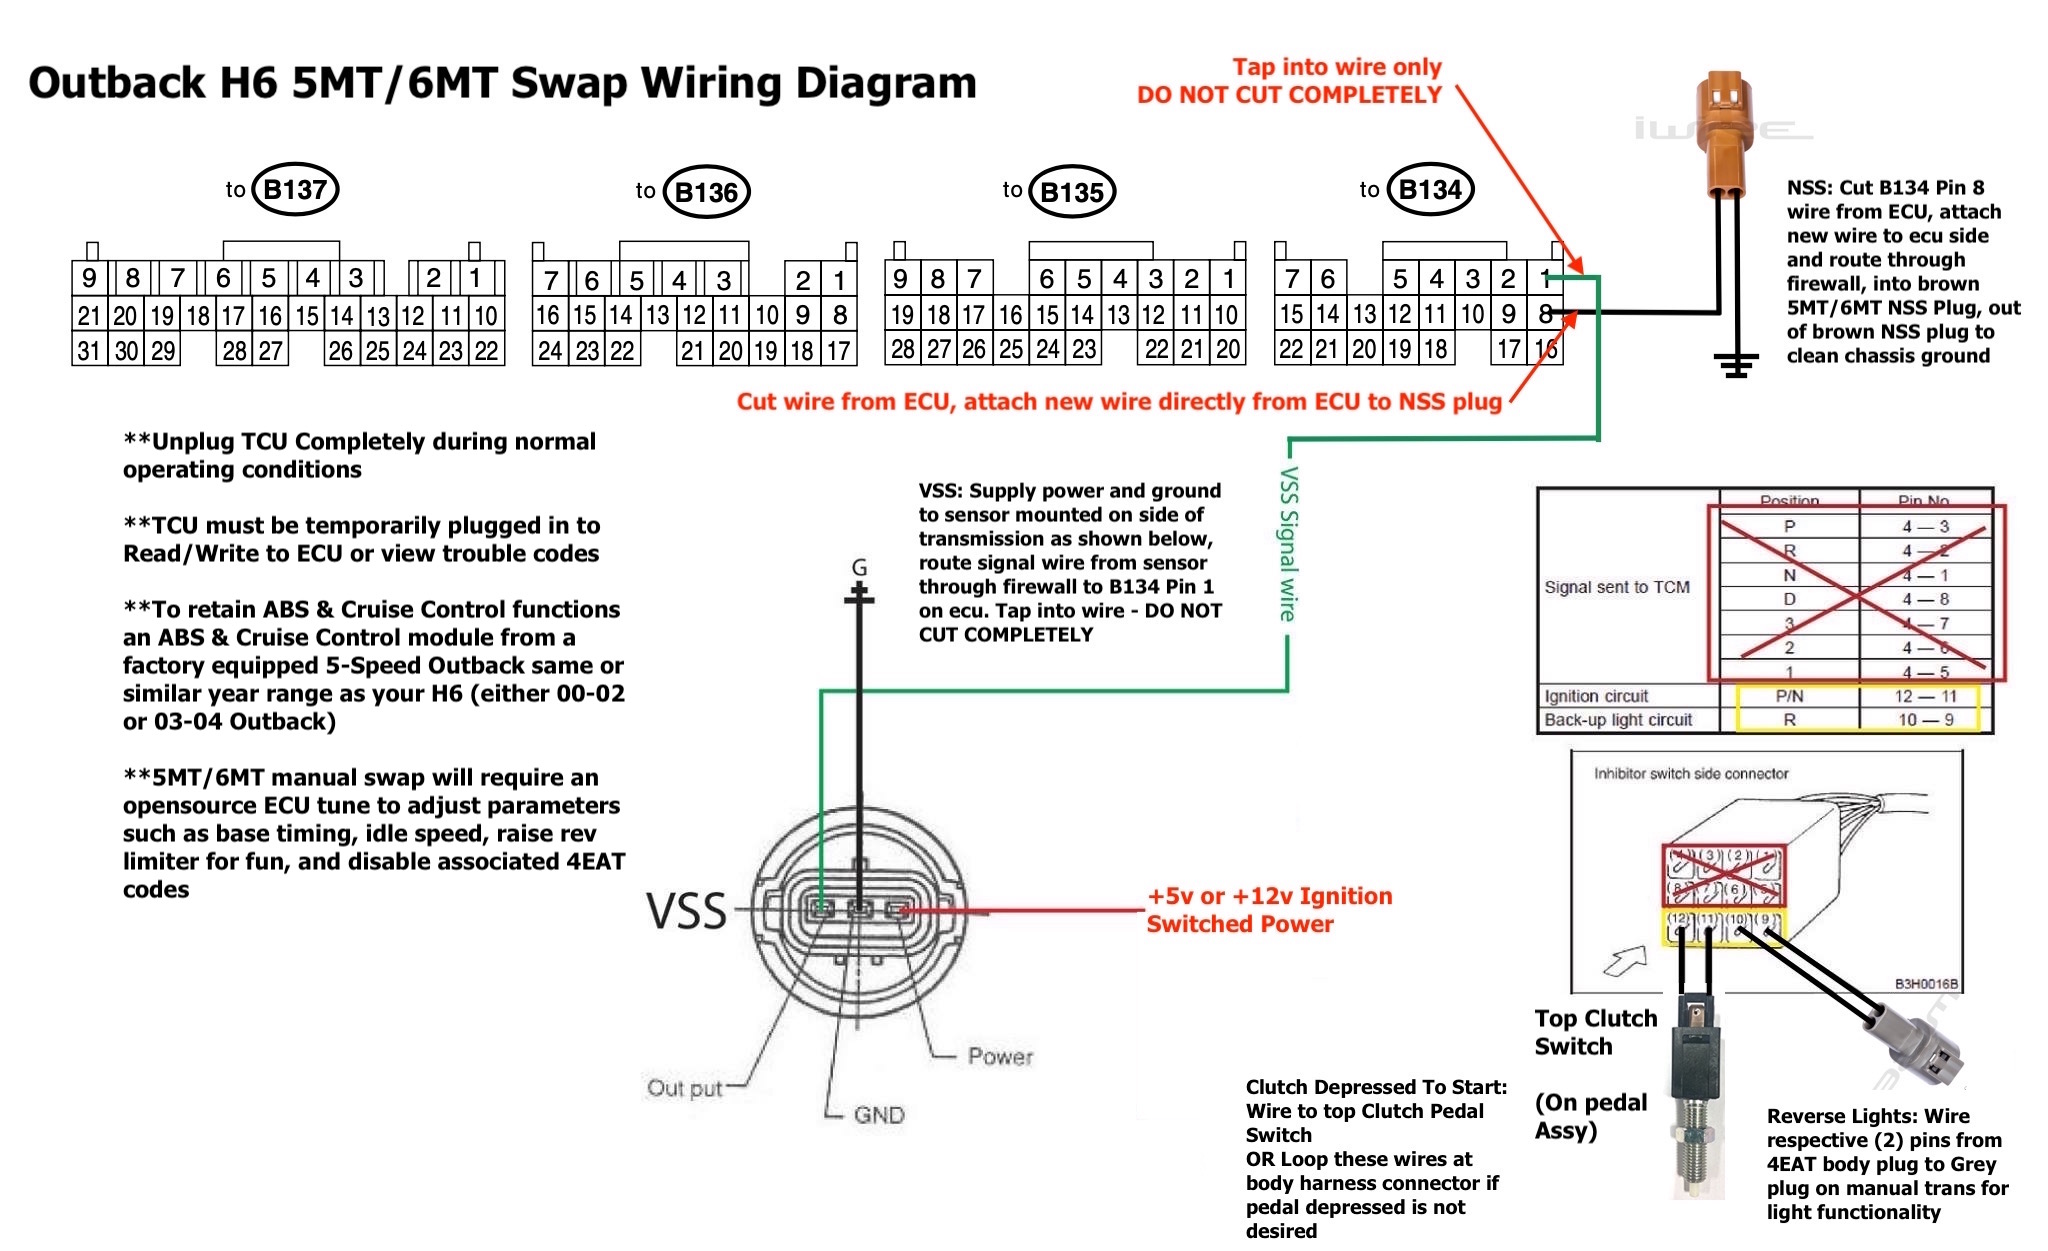 H6 Manual Swap Wiring Diagram.JPG